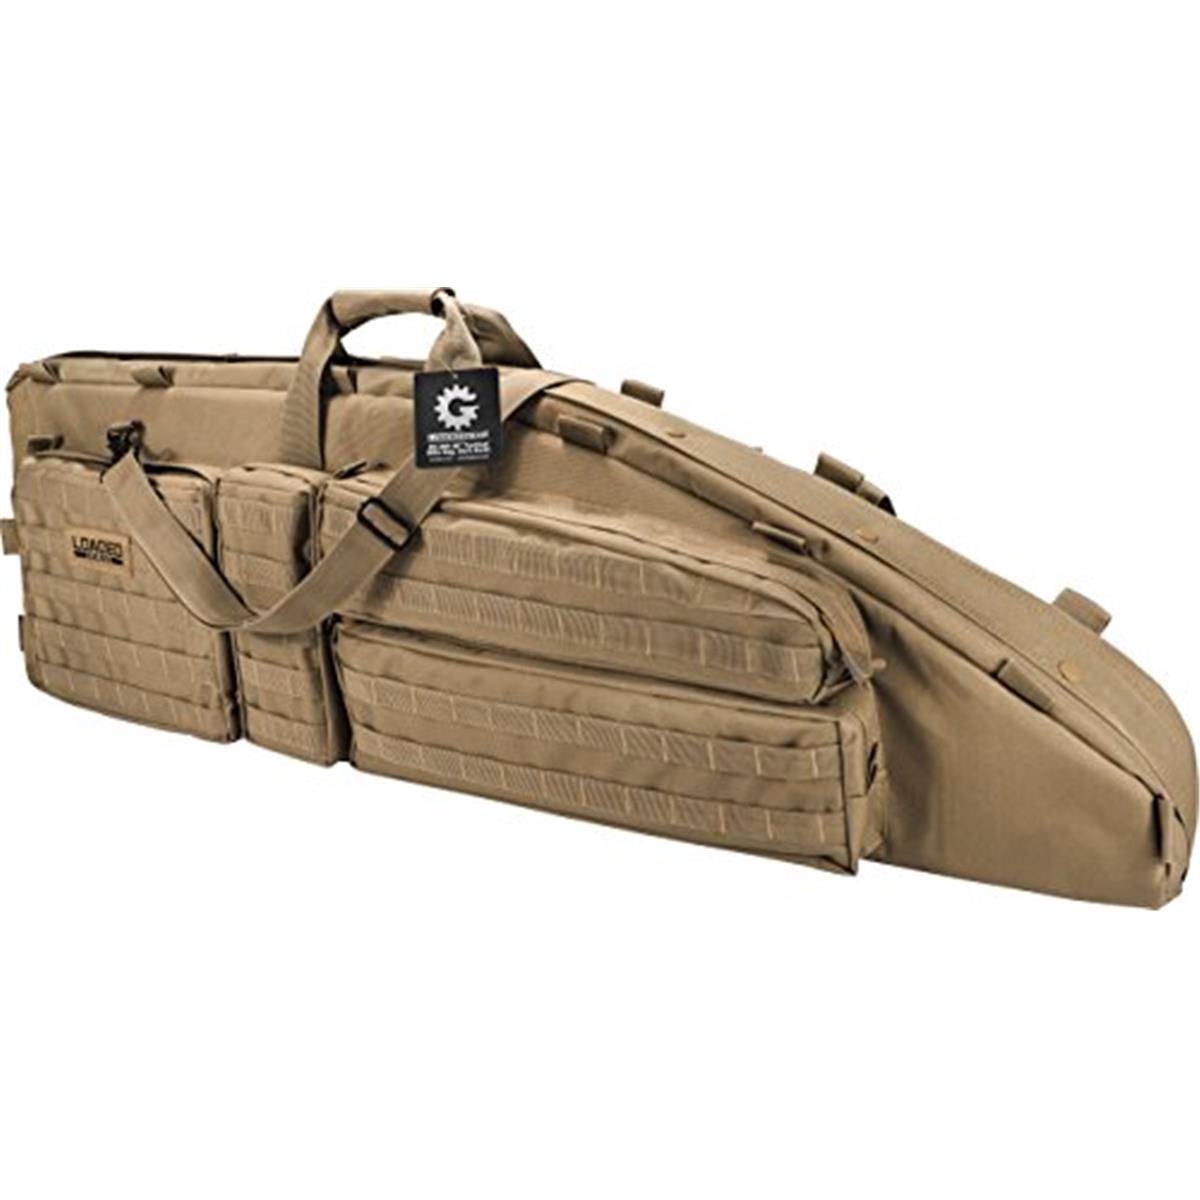 Bi12552 Loaded Gear Rx-600 46 In. Tactical Rifle Bag Dark Earth